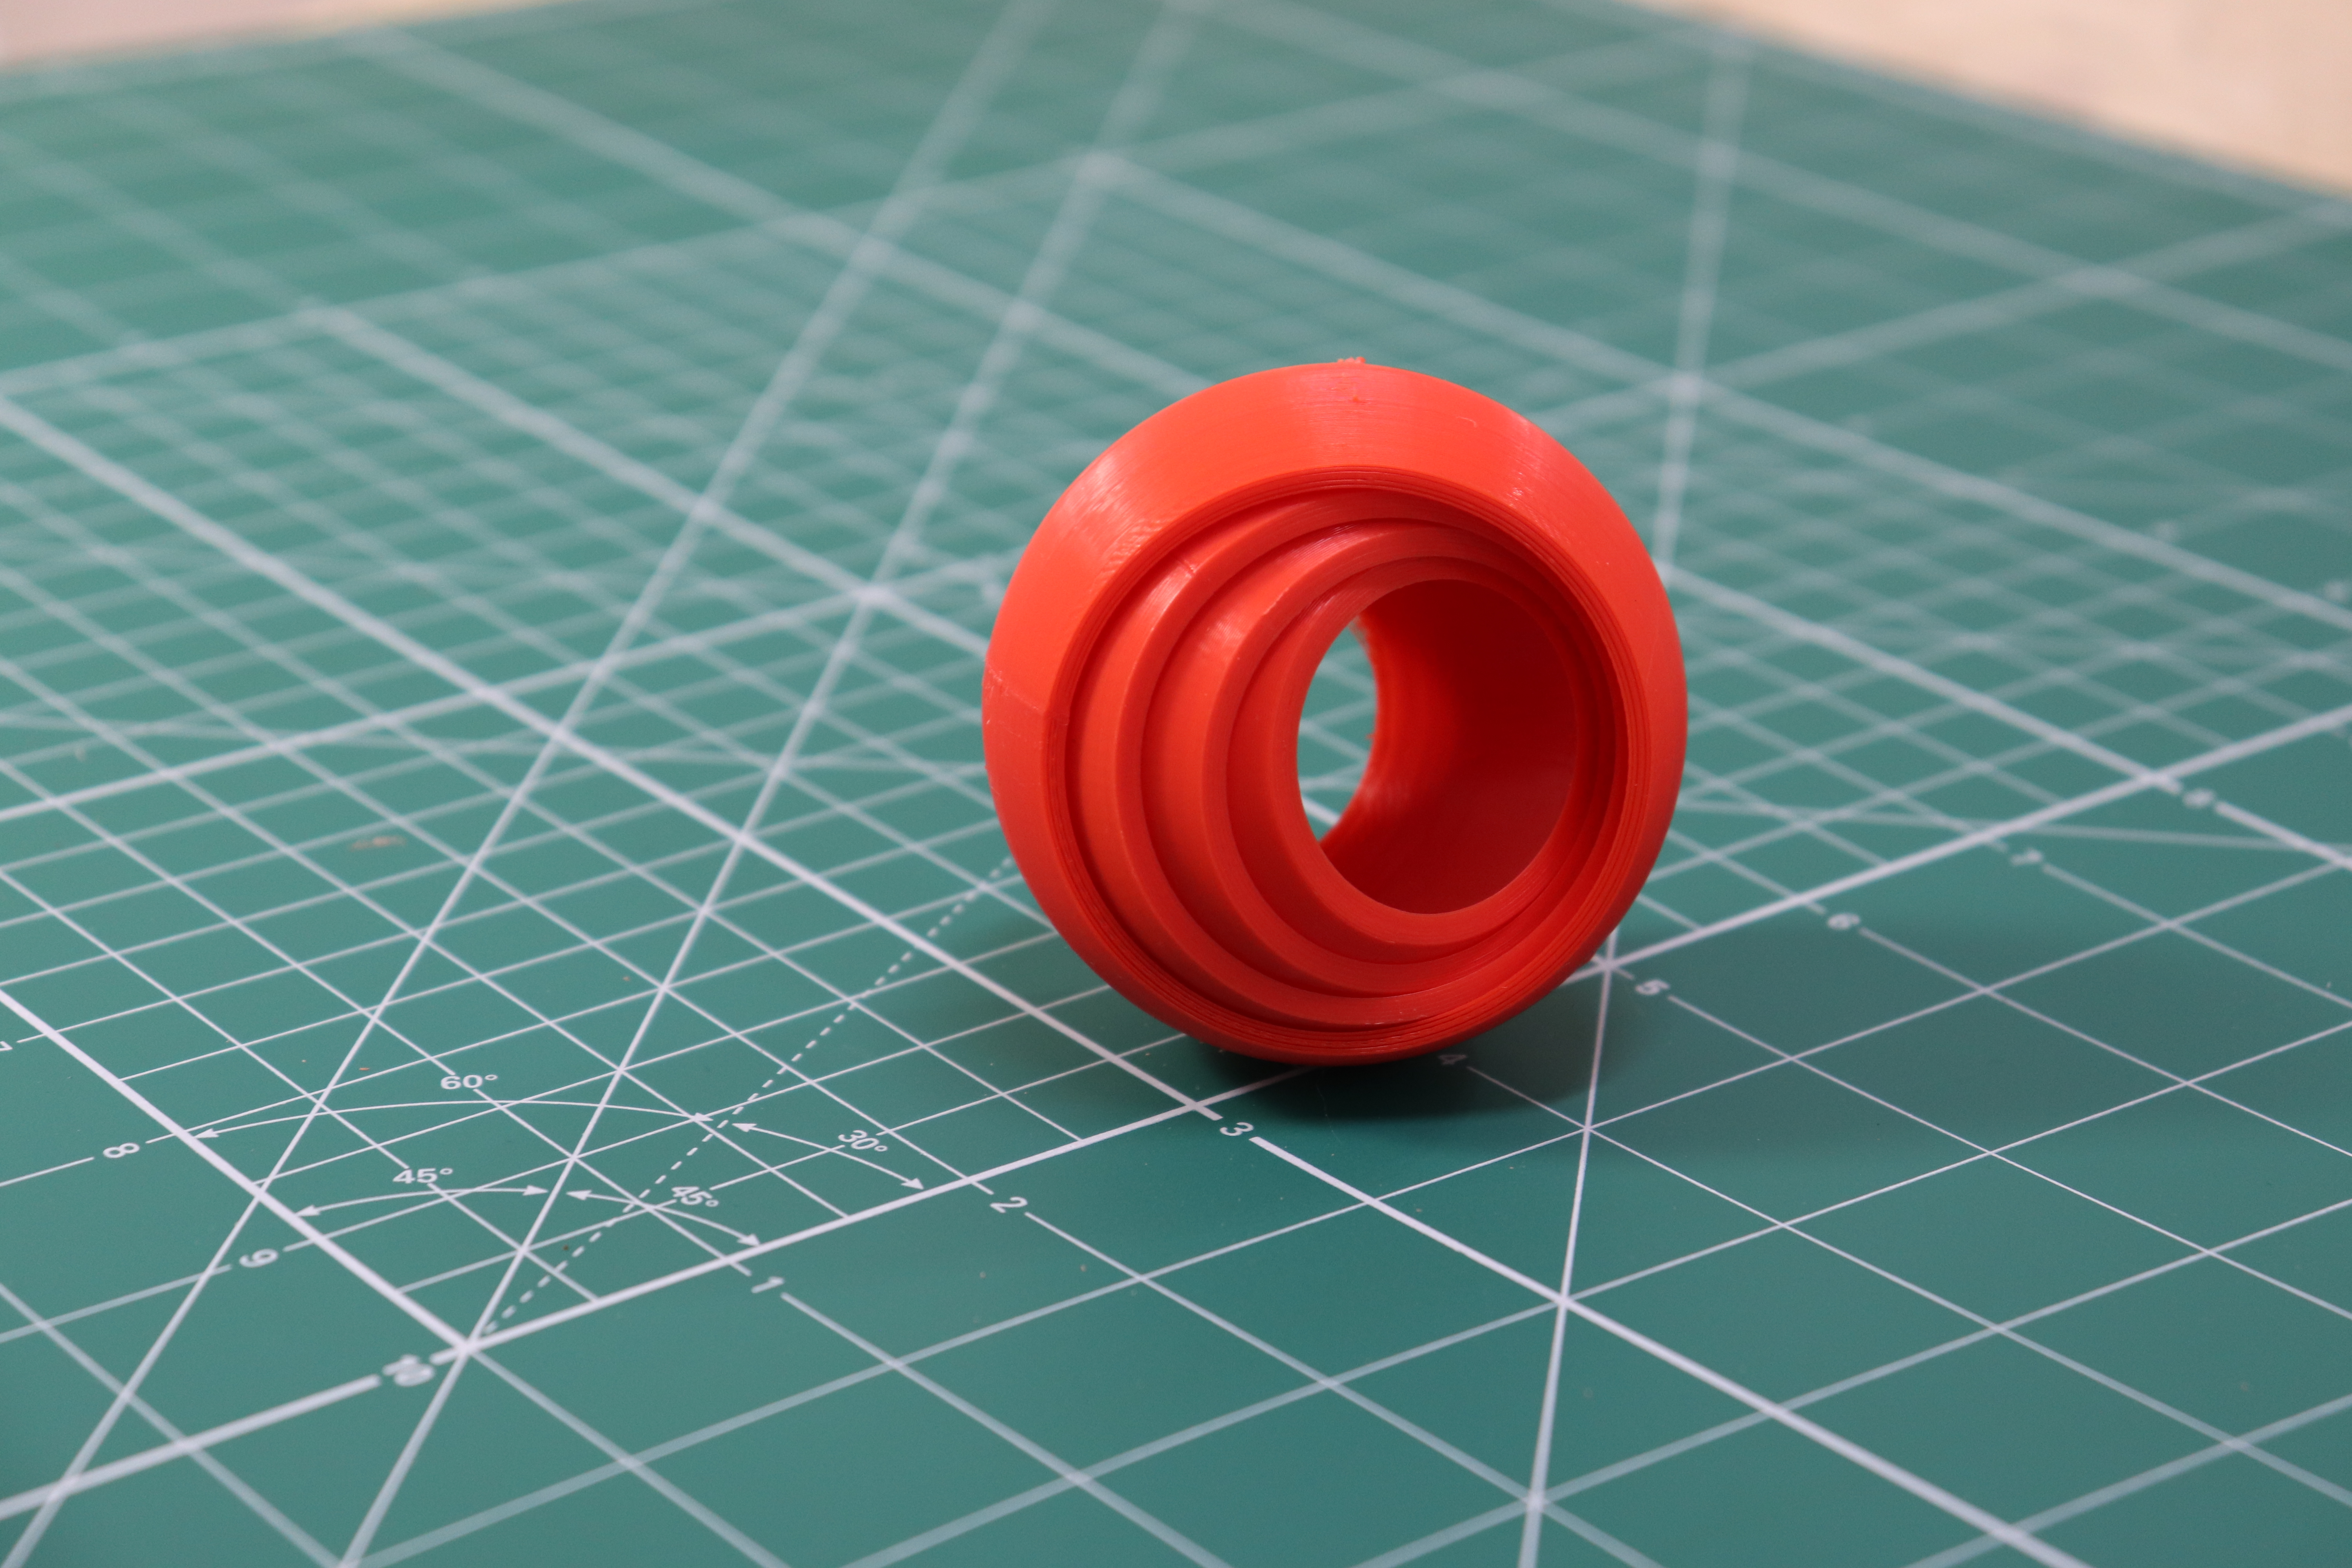 Balls in Balls - Fidget spinner - Print in Place!